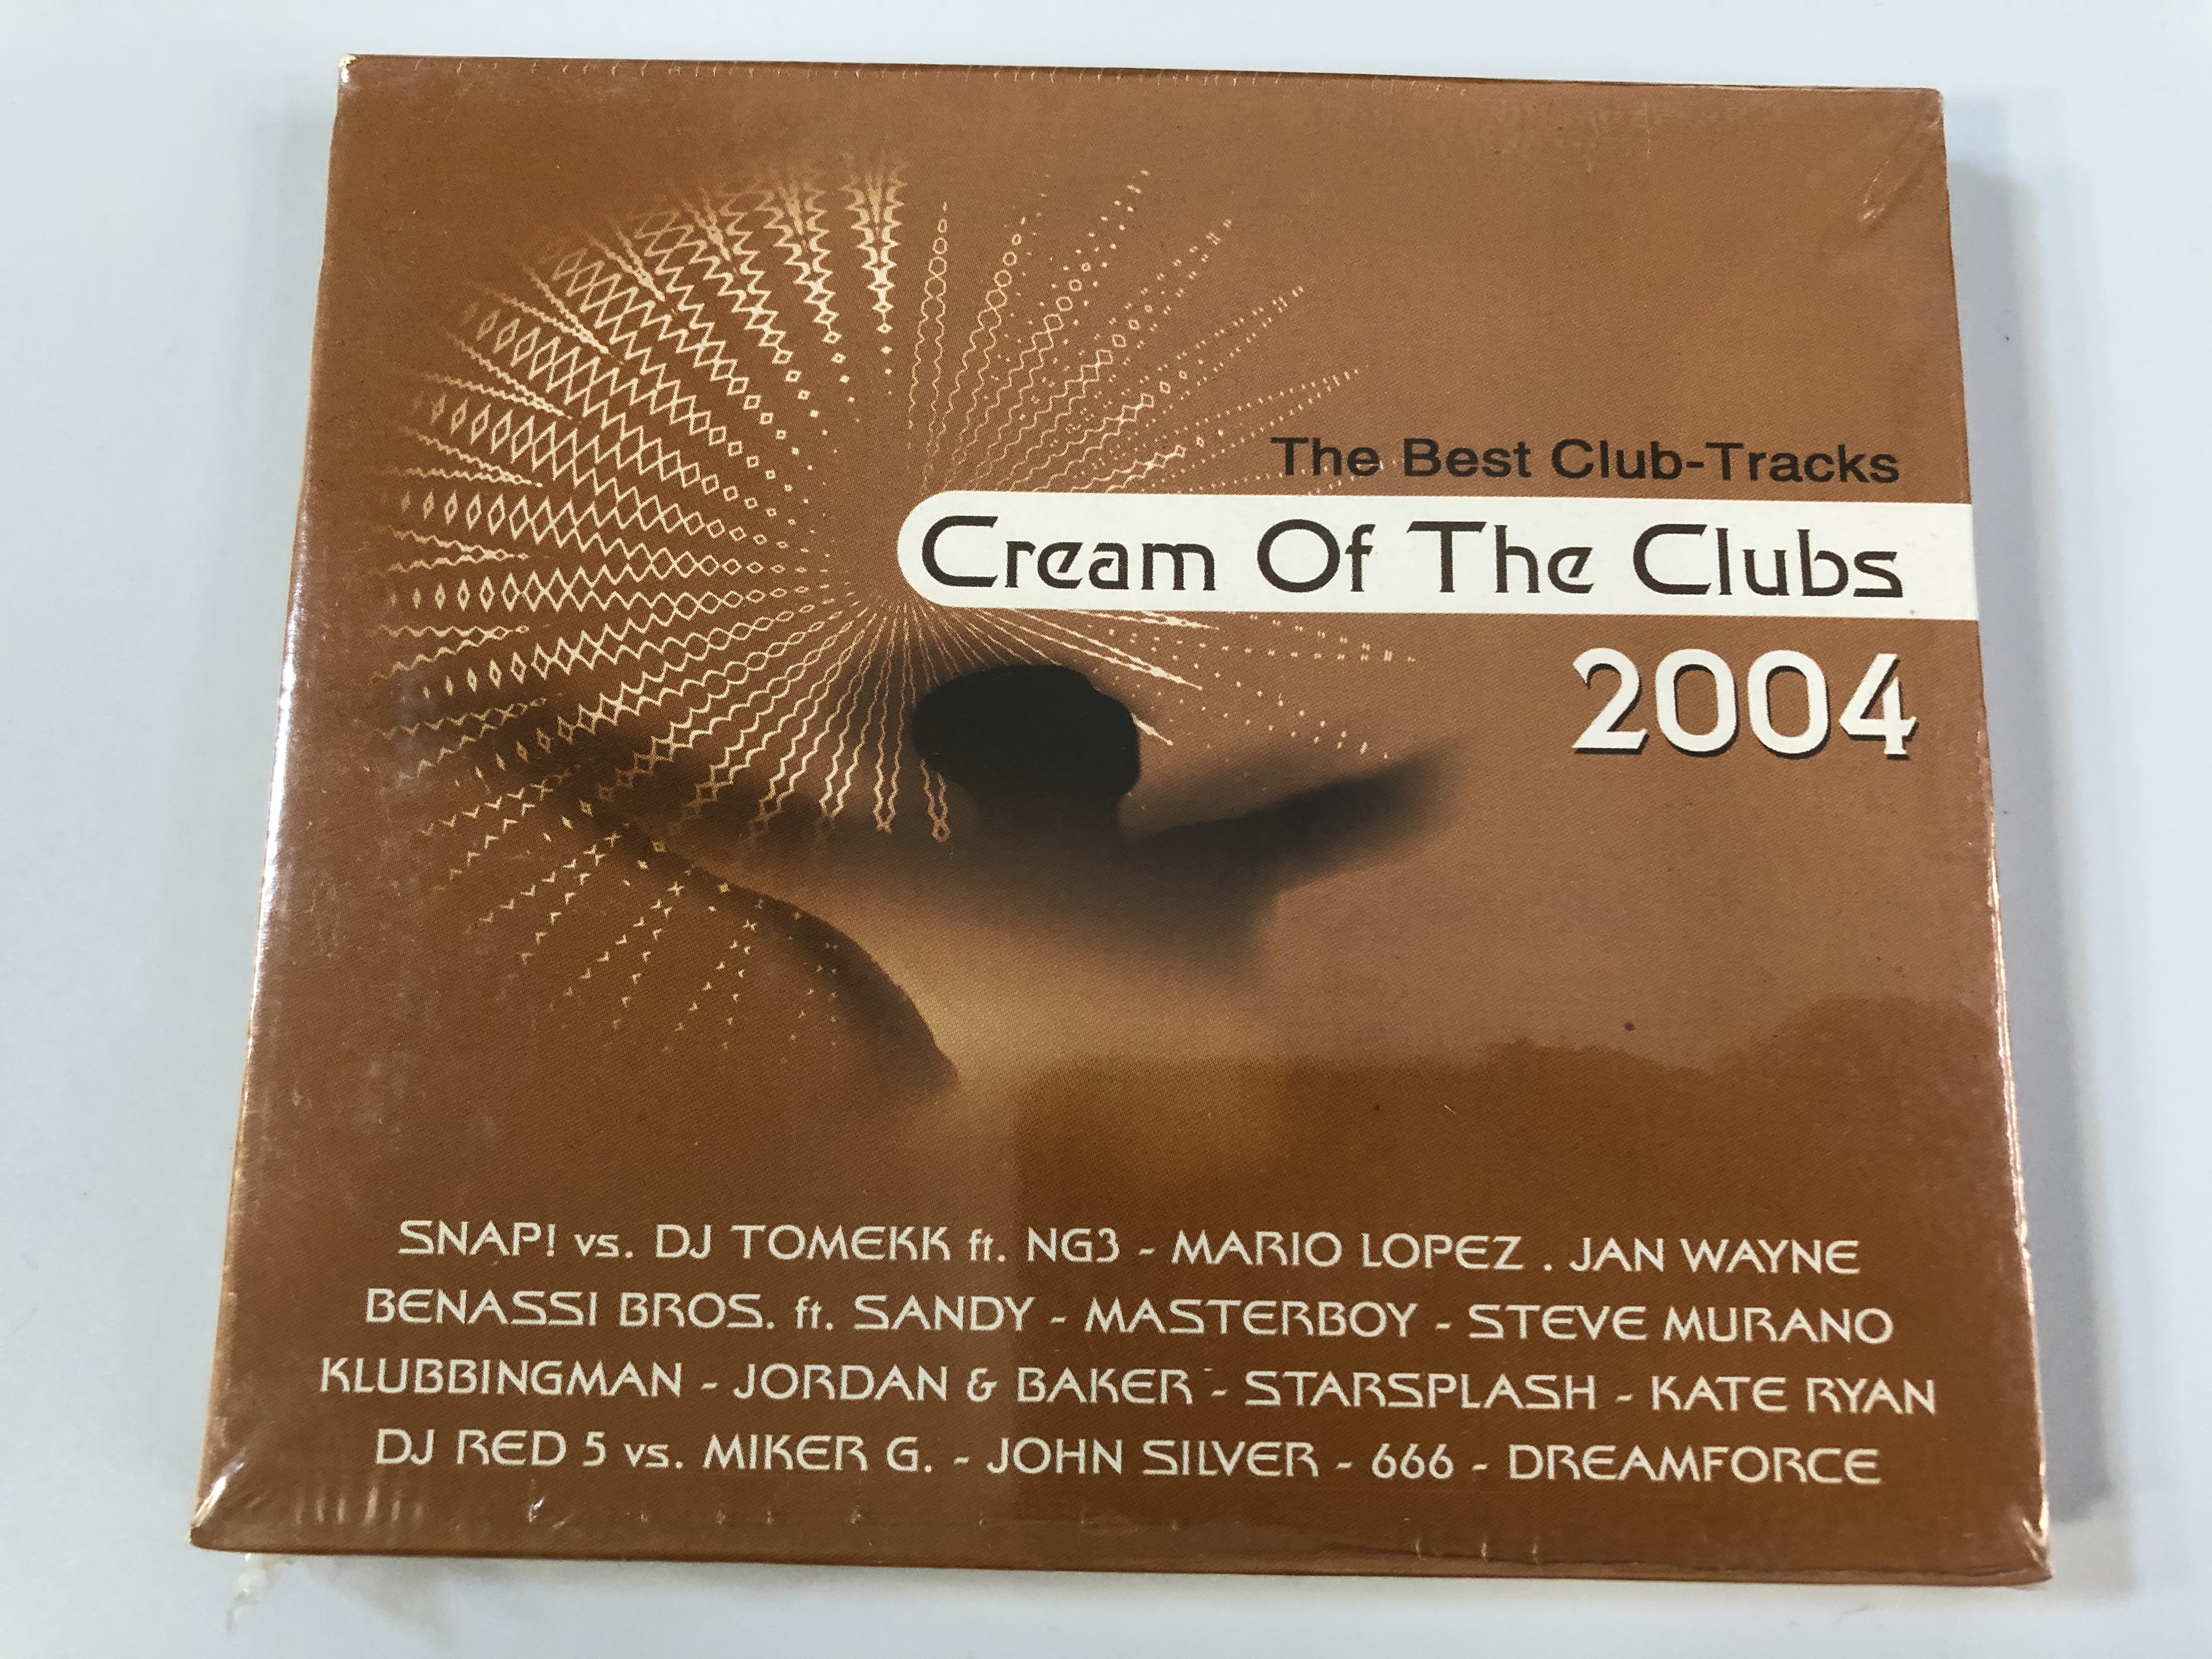 the-best-club-tracks-cream-of-the-clubs-2004-snap-vs.-dj-tomekk-ft.-ng3-mario-lopez-jan-wayne-benassi-bros.-ft.-sandy-masterboy-steve-murano-klubbingman-jordan-baker-starsplash-1-.jpg